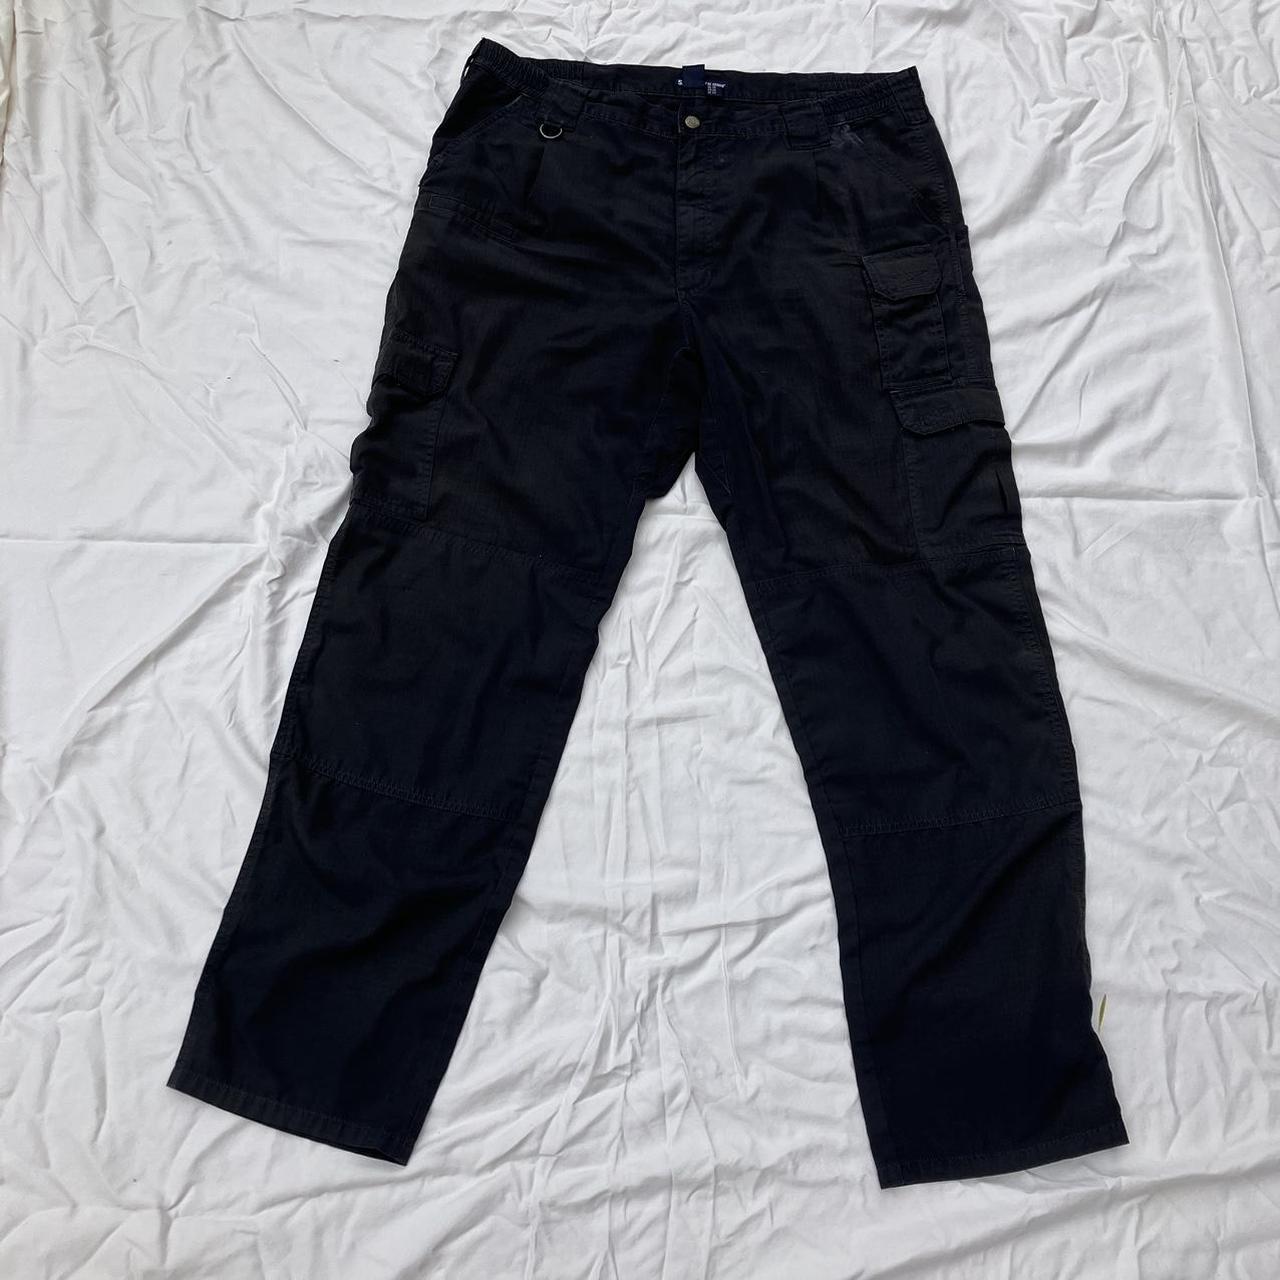 Black cargo pants 🖤